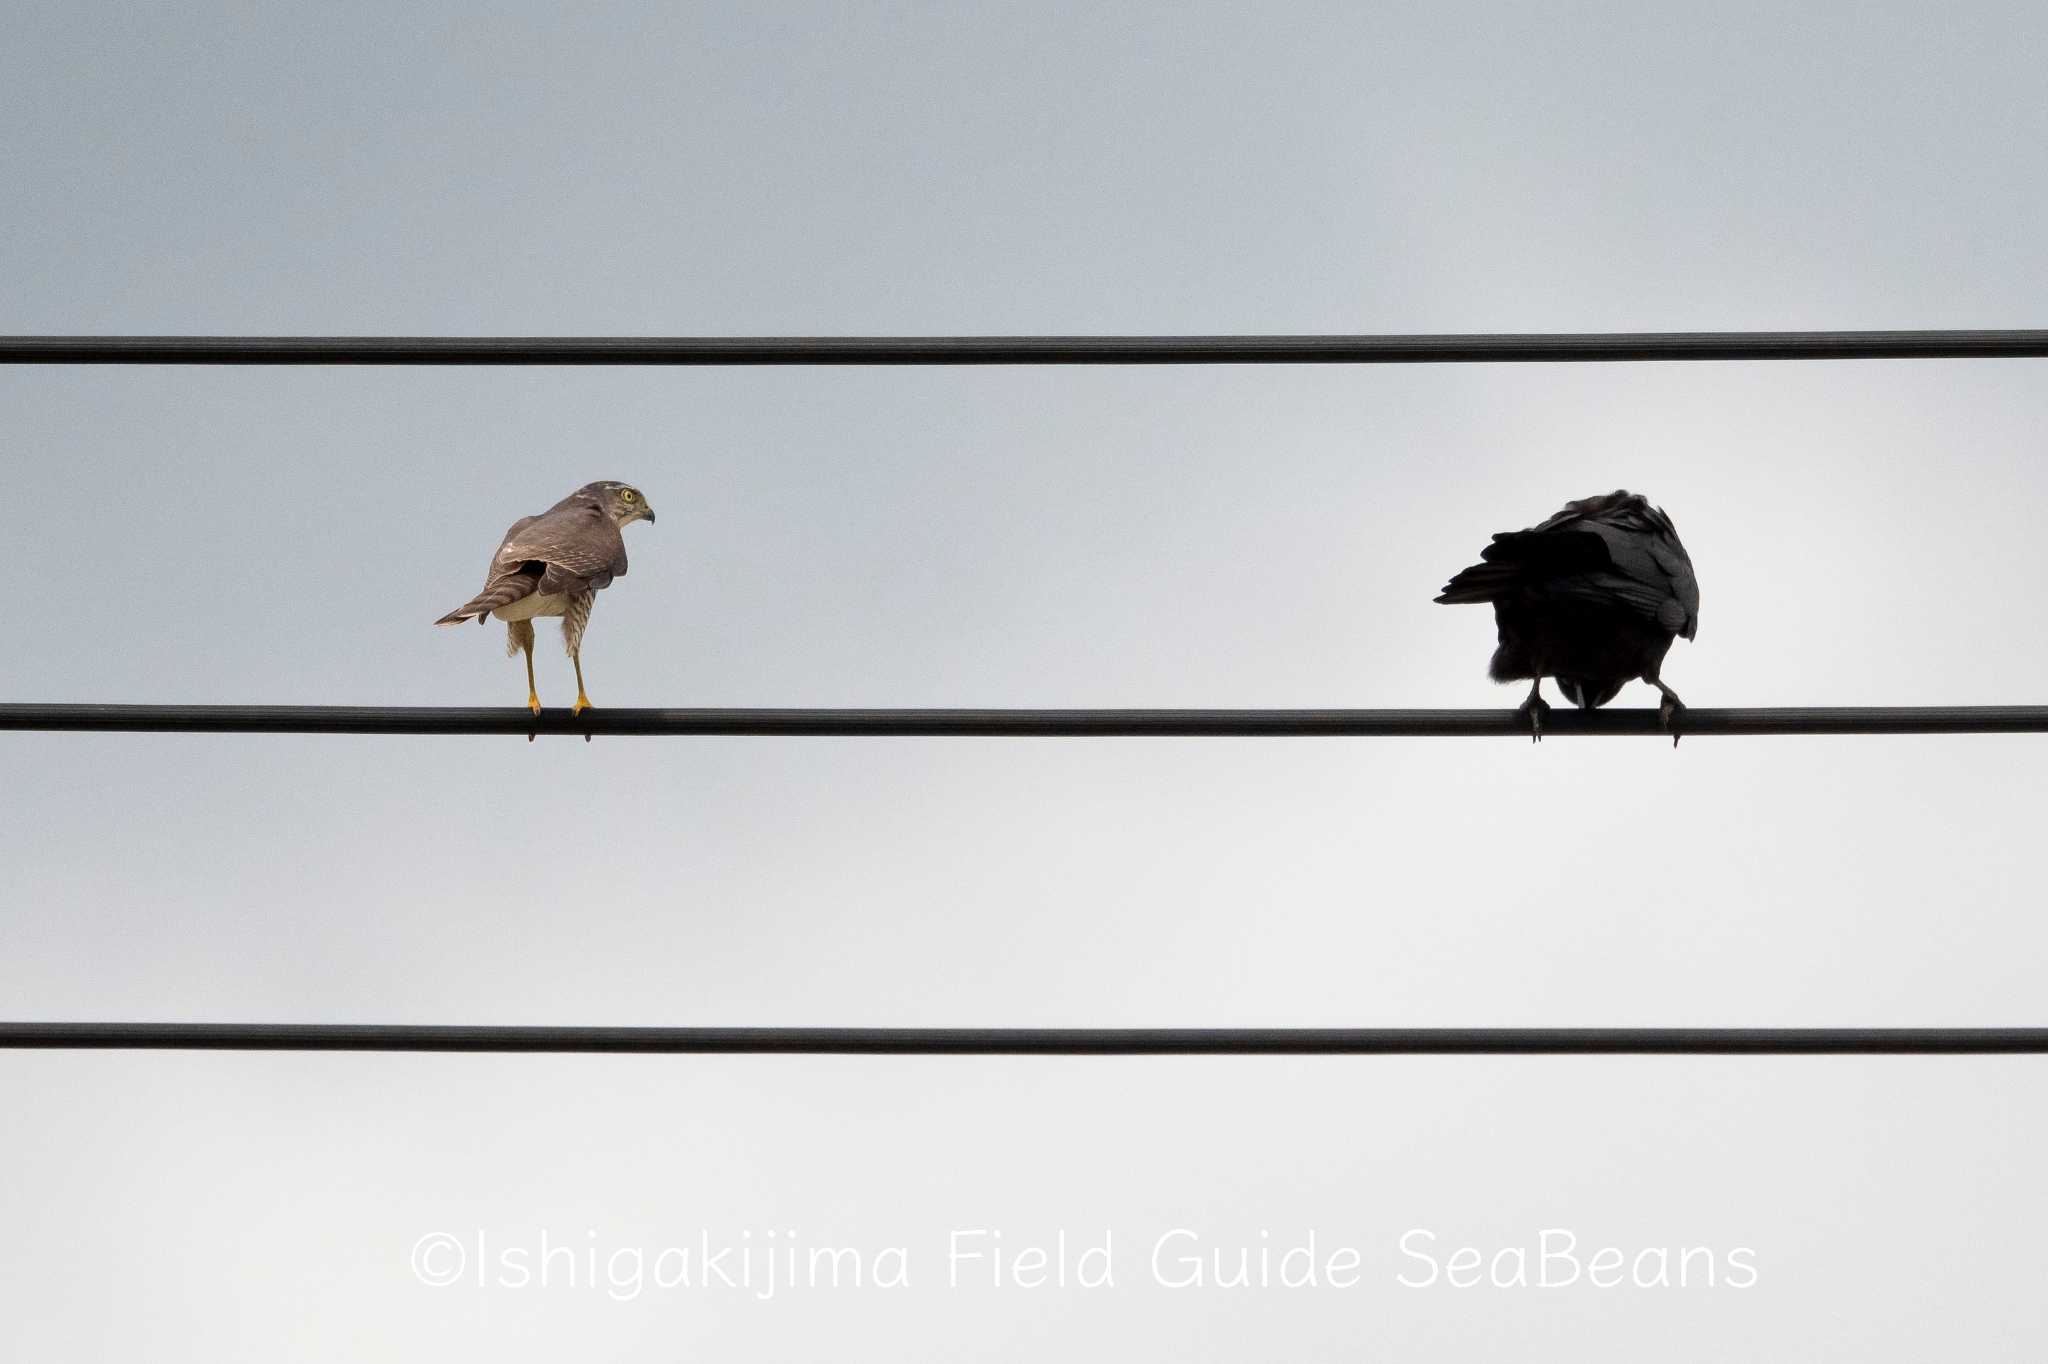 Photo of Japanese Sparrowhawk(iwasakii) at Ishigaki Island by 石垣島バードウオッチングガイドSeaBeans